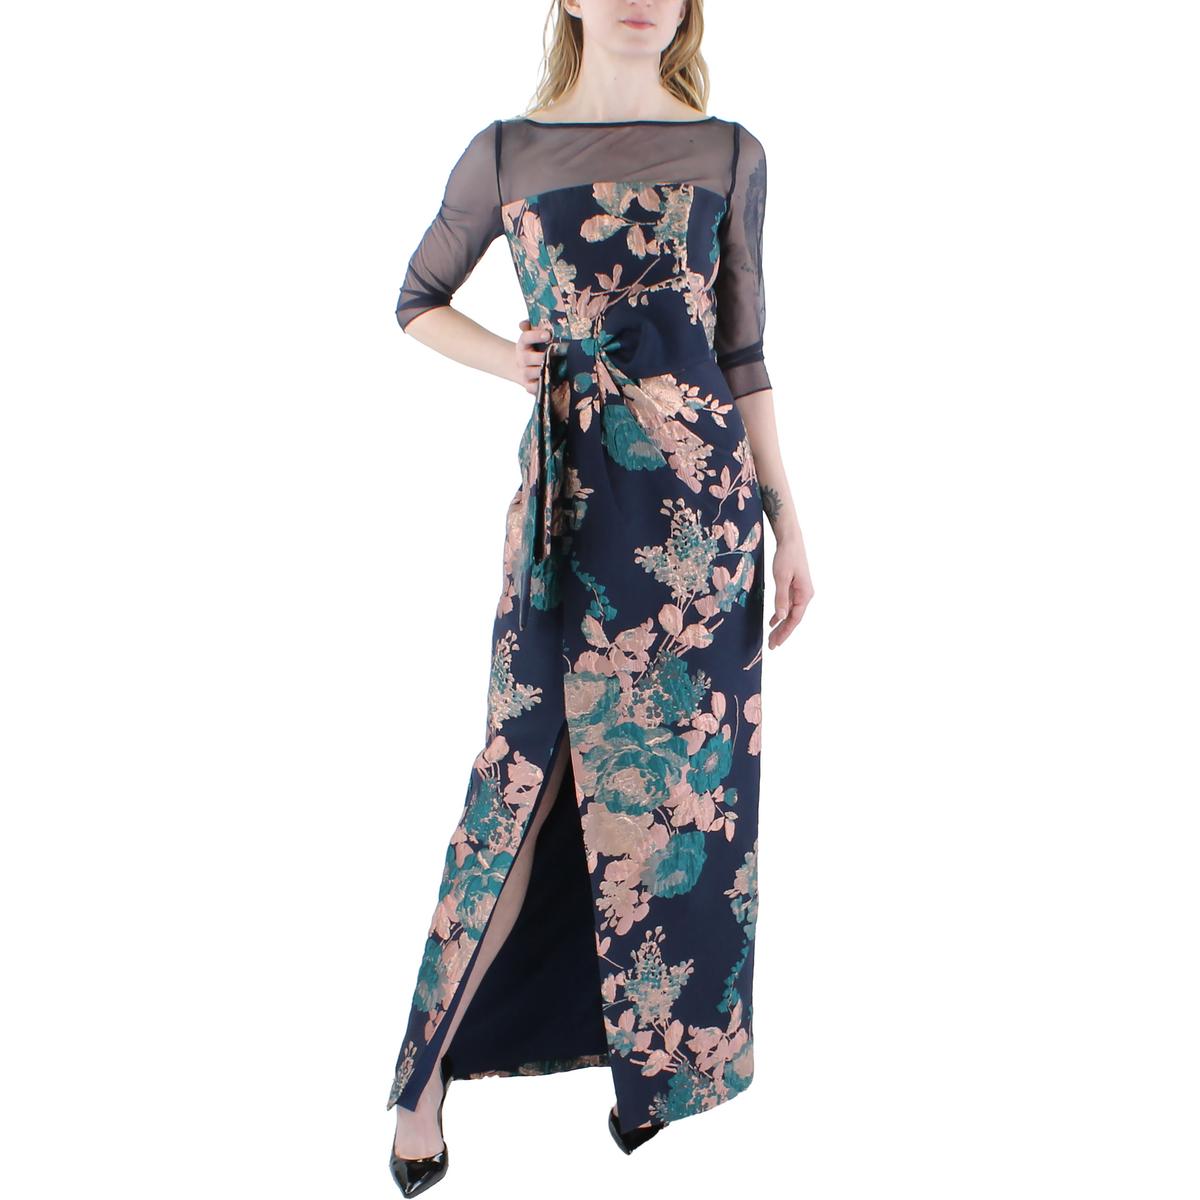 Kay Unger New York Womens Floral Metallic Formal Evening Dress